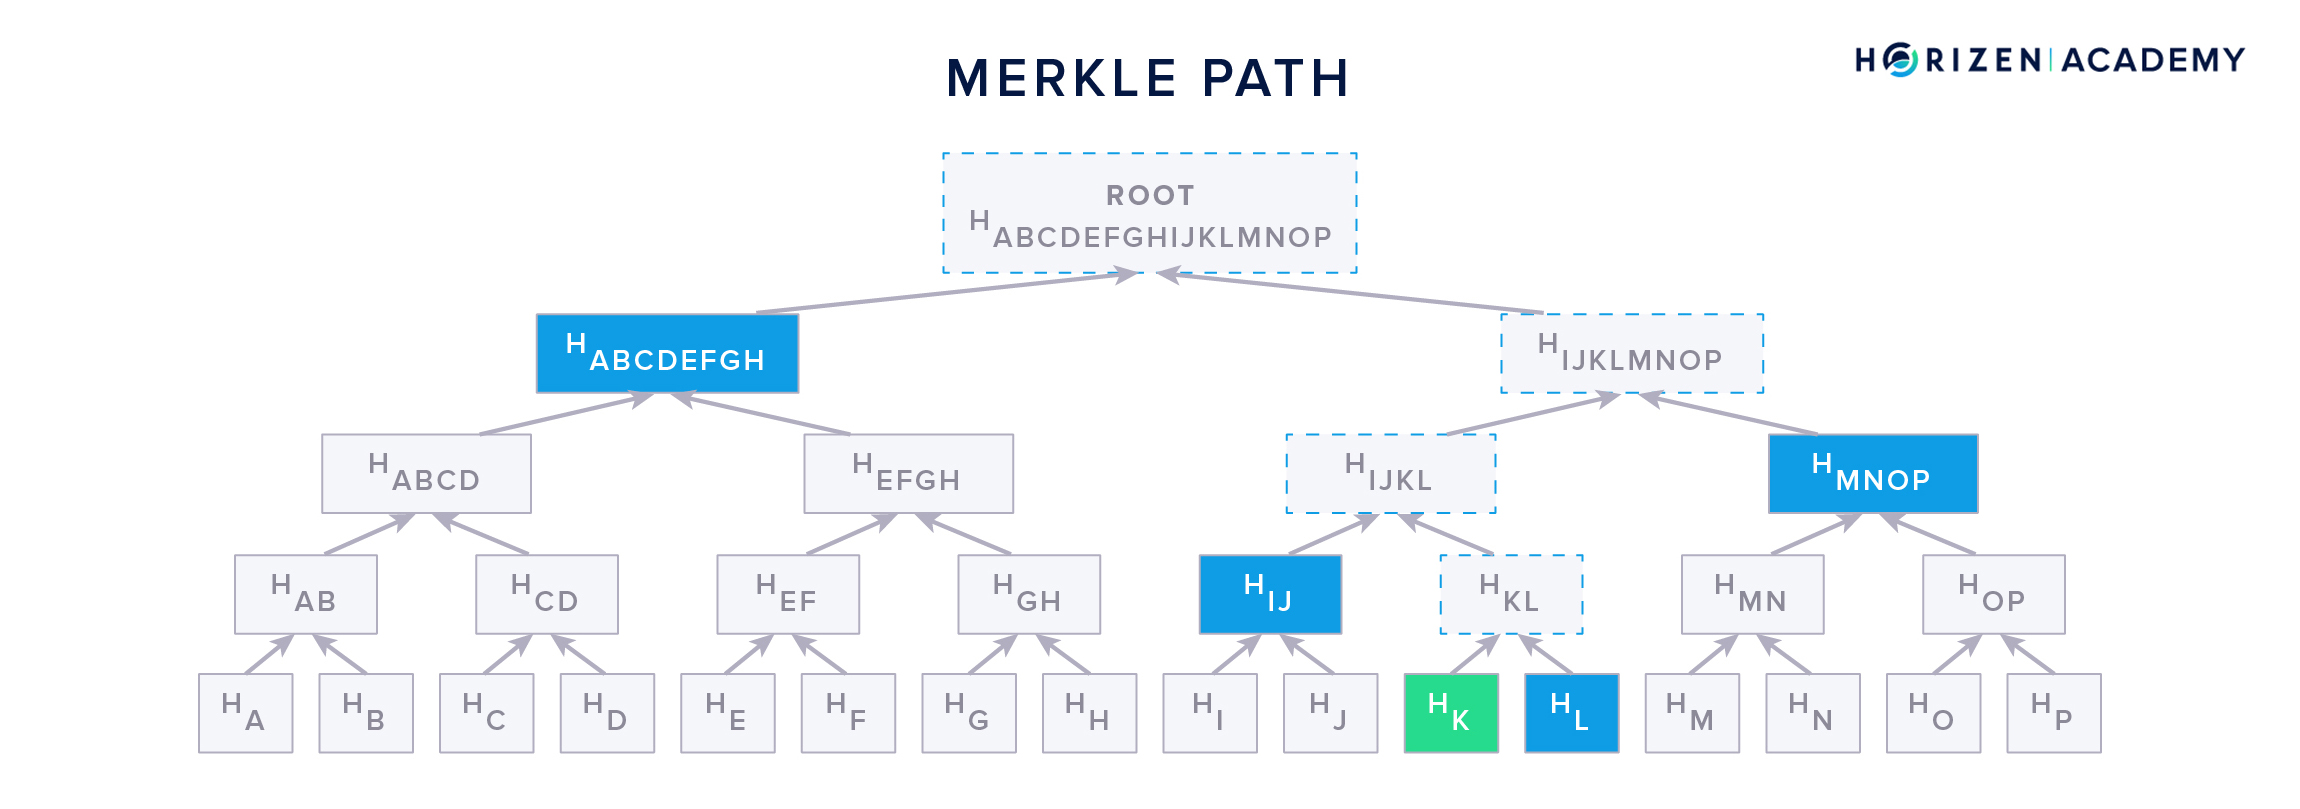 merkle structured data tool